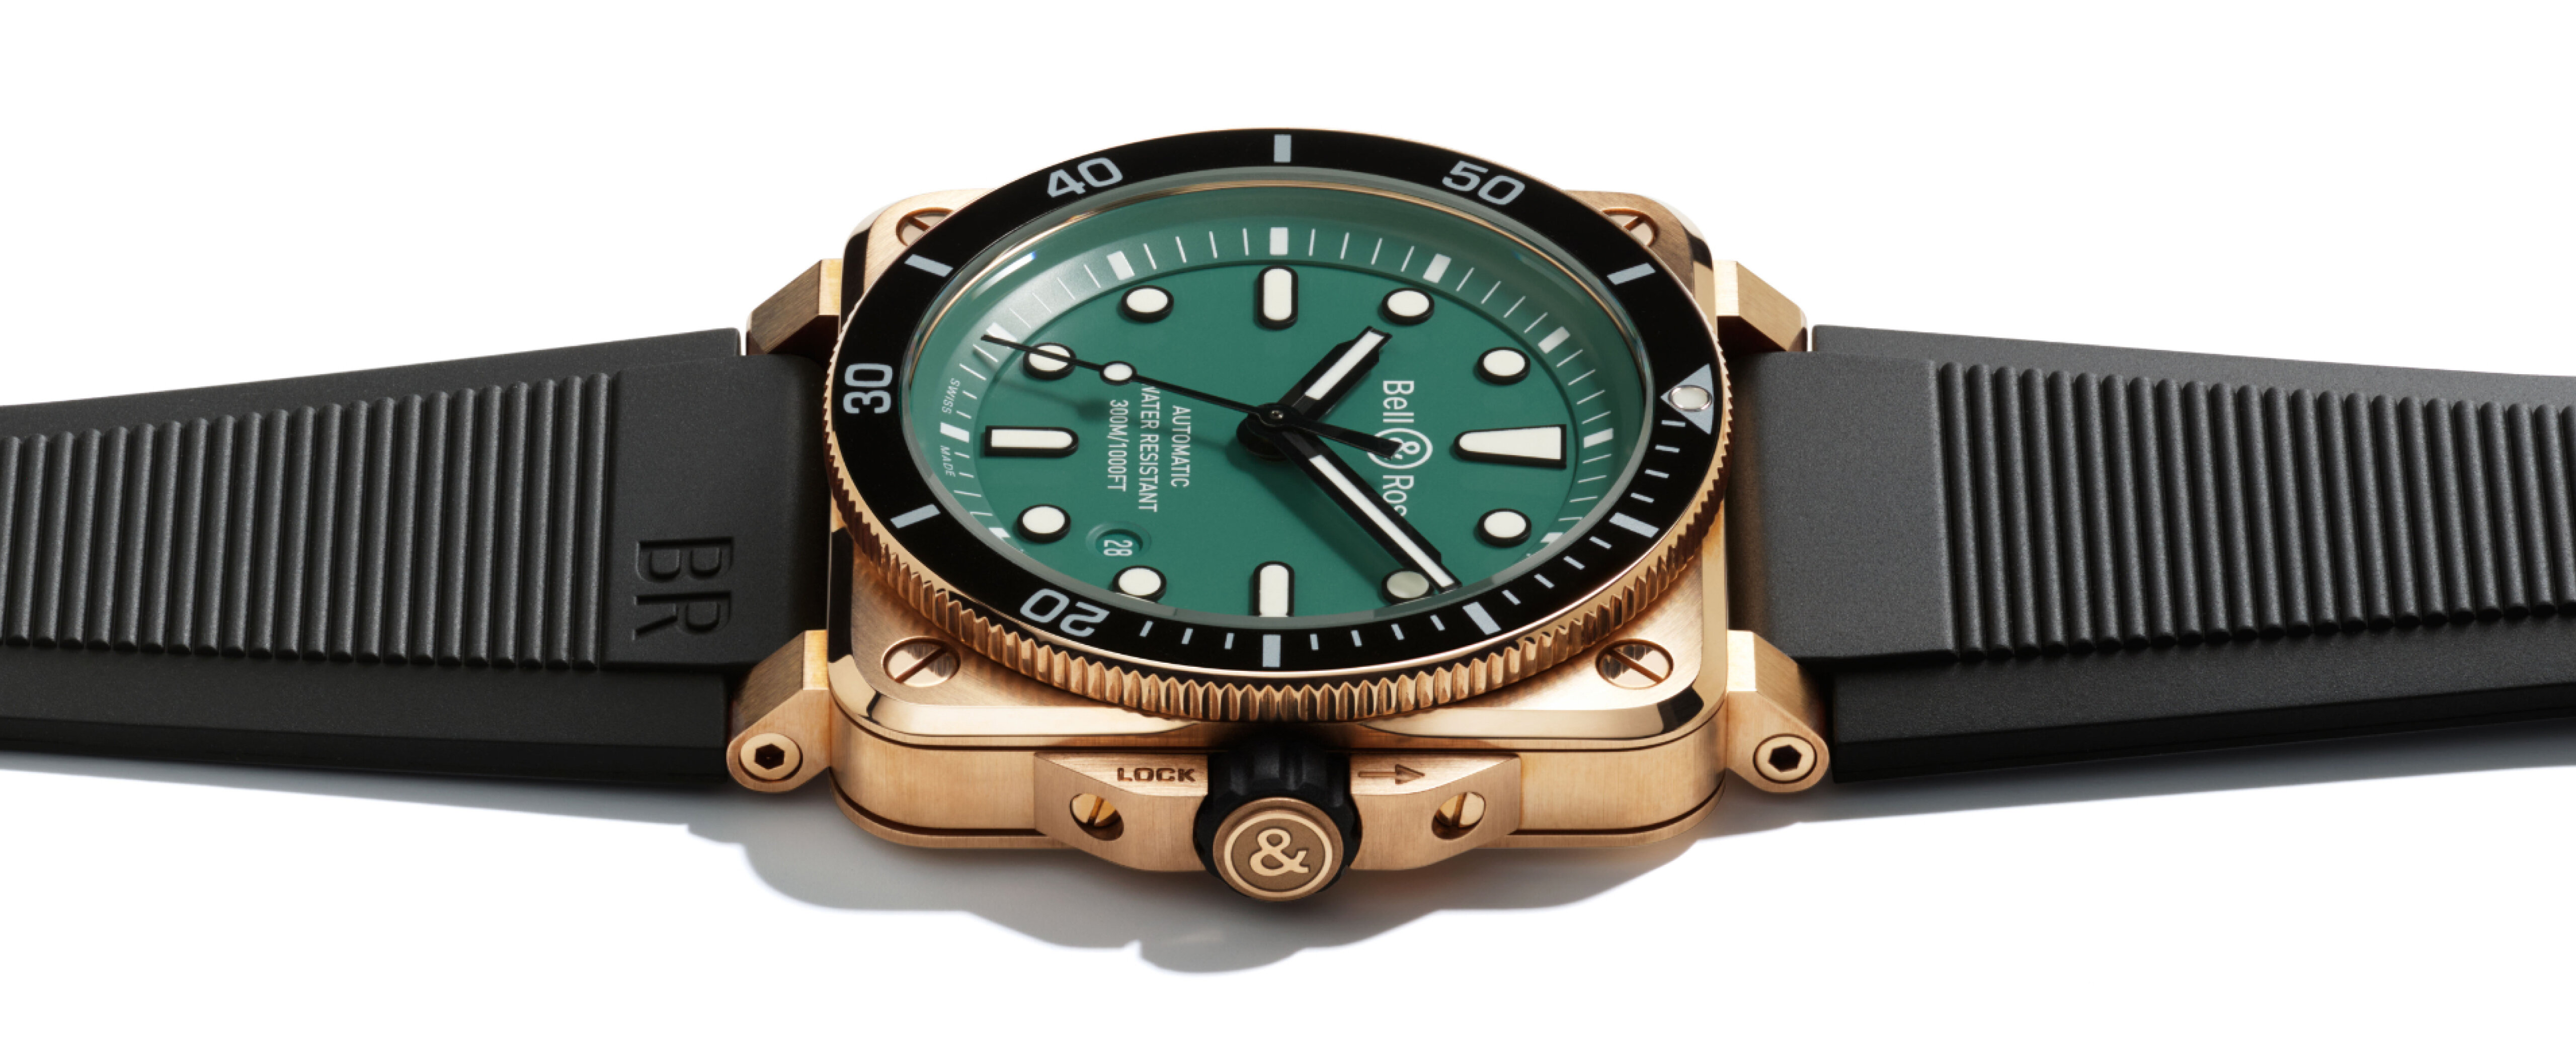 BR 03-92 Diver Black & Green Bronze